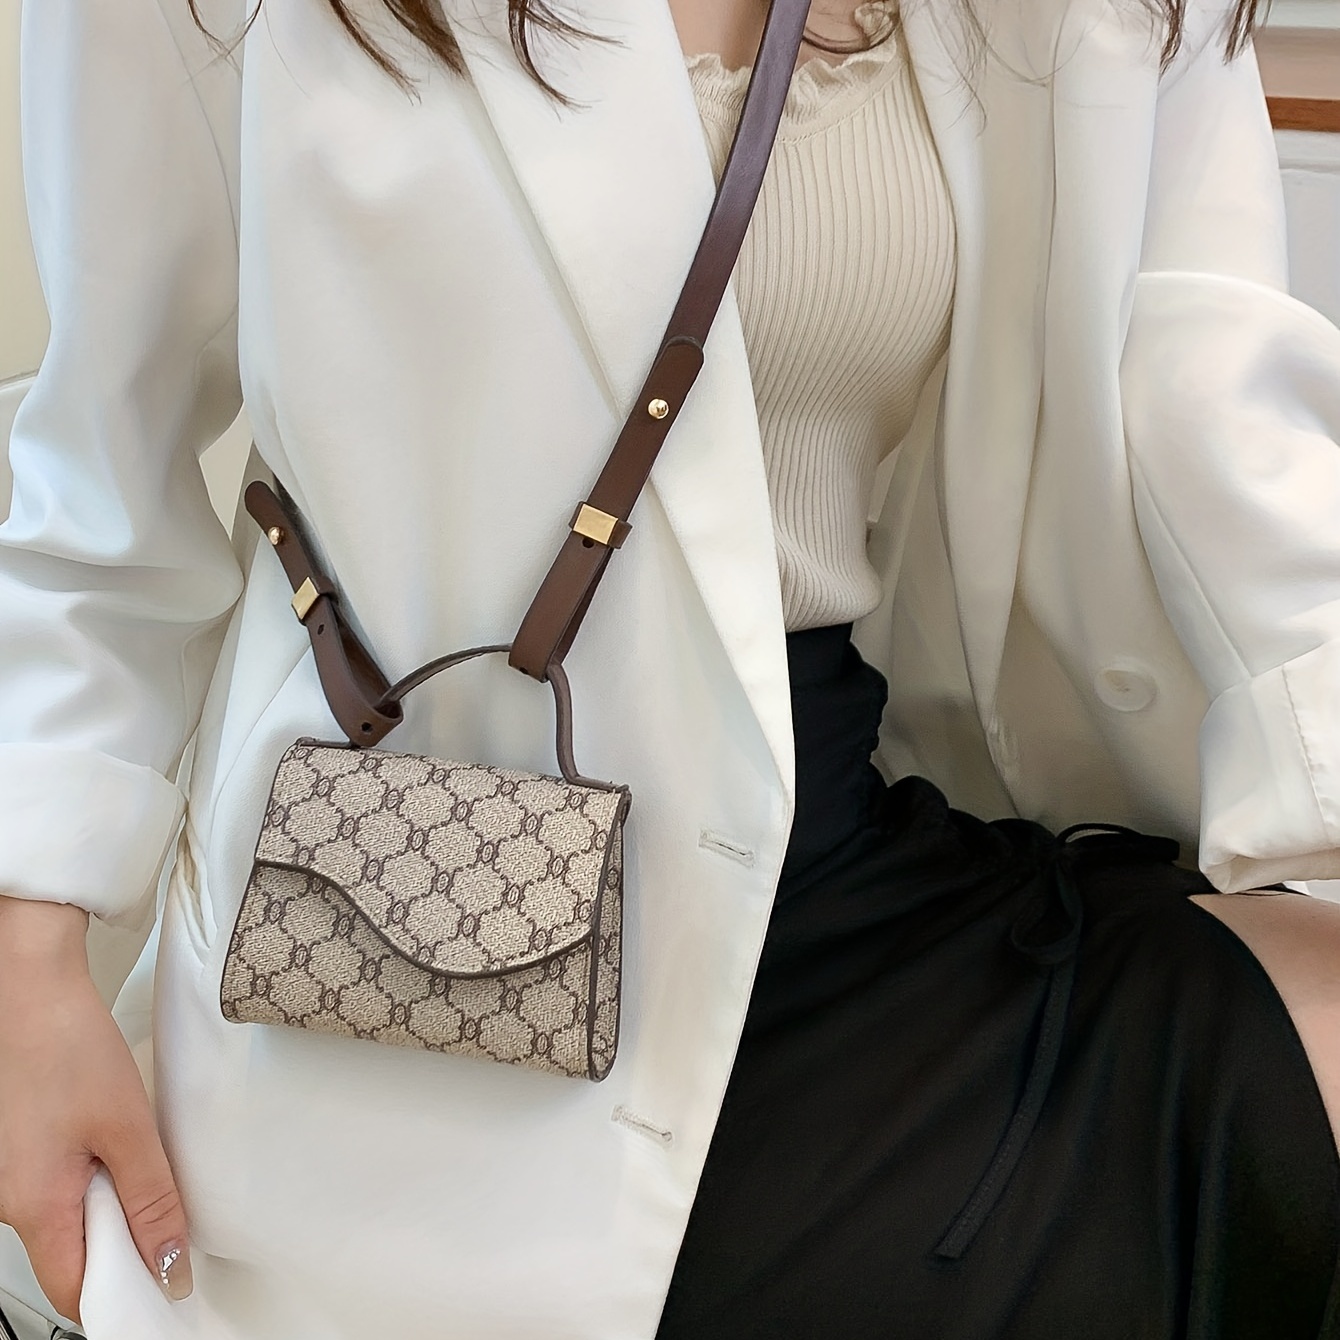 Pu Leather Printed Gucci Handbag, For Casual Wear